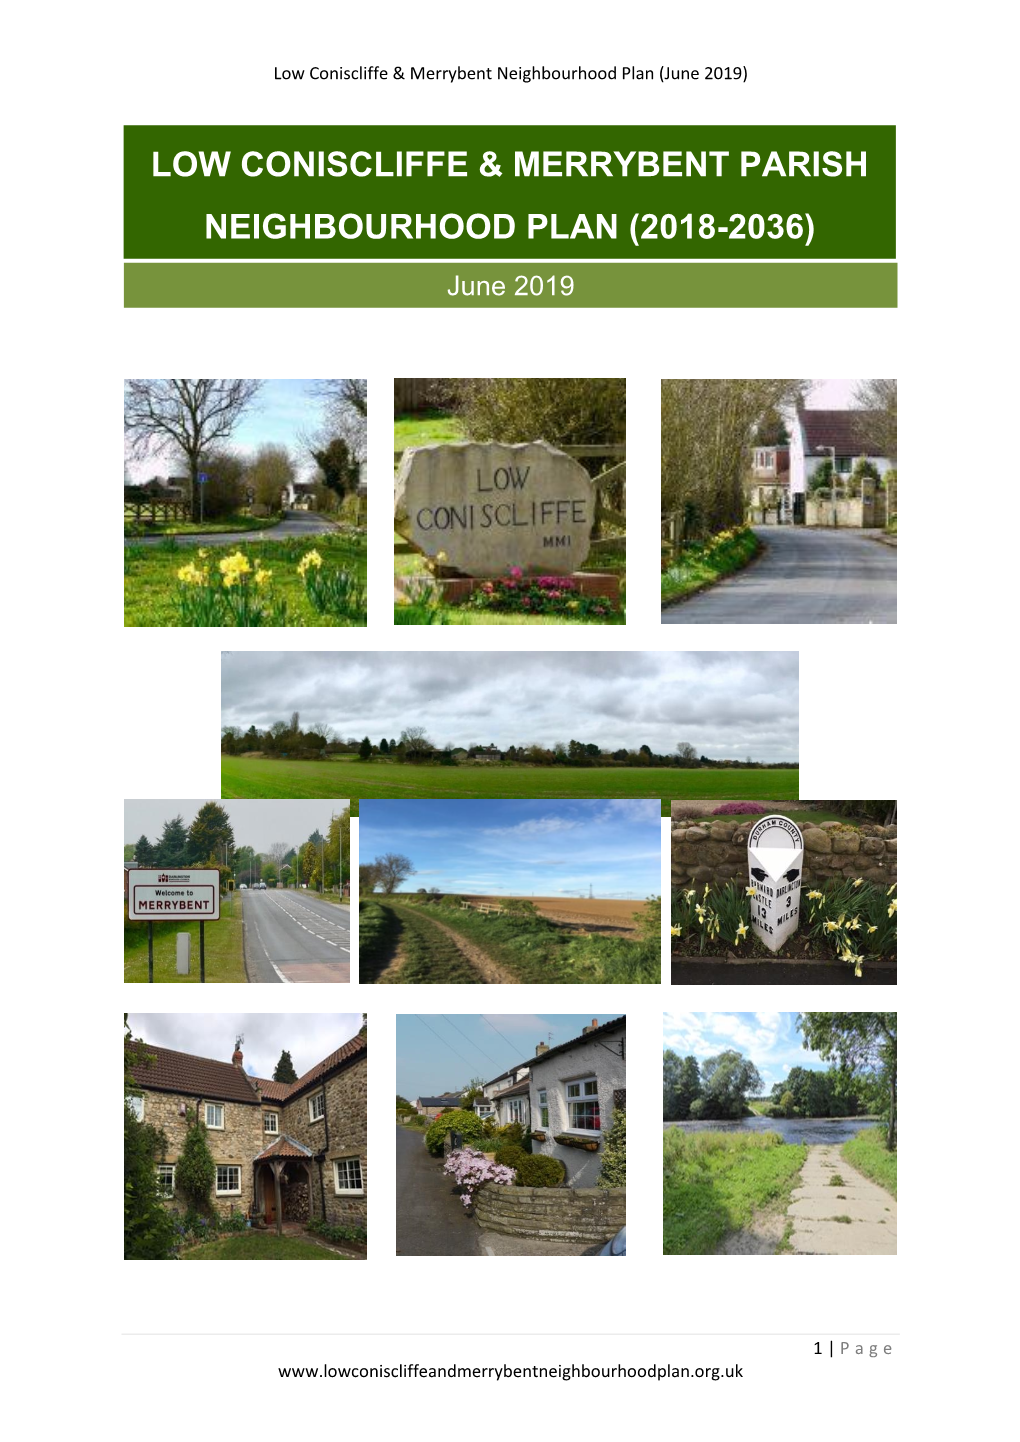 Low Coniscliffe & Merrybent Parish Neighbourhood Plan